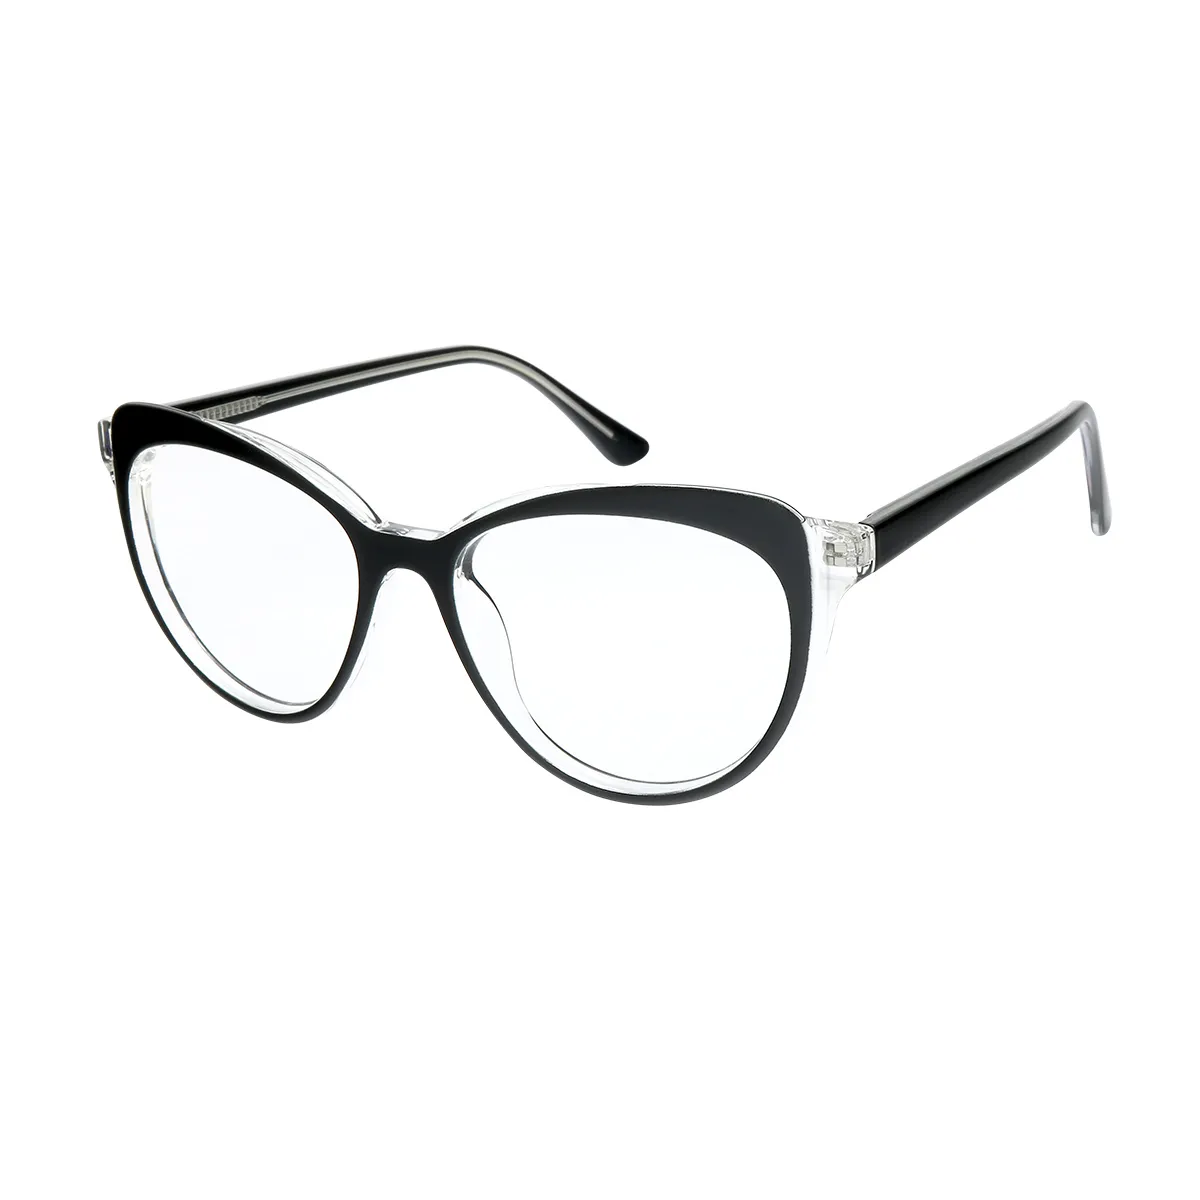 Fashion Cat-eye Black/Transparent Eyeglasses for Women